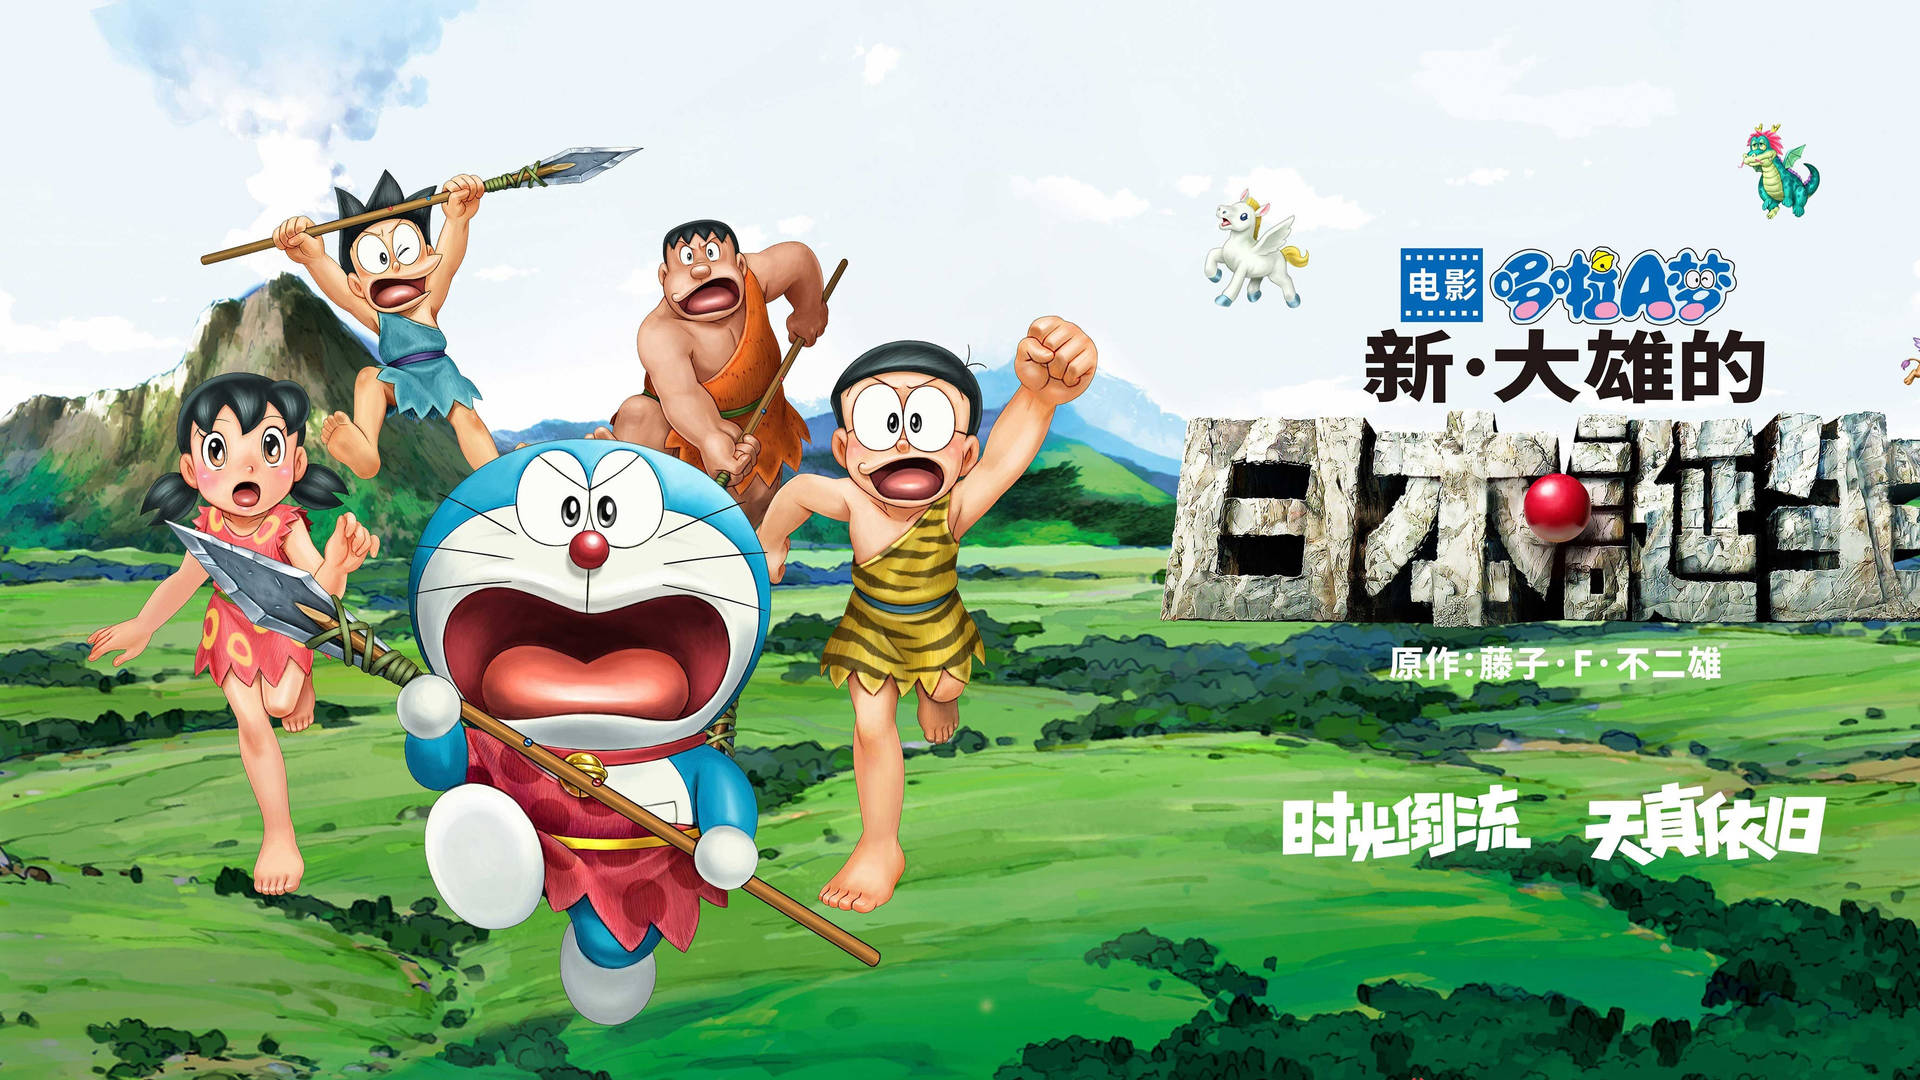 Doraemon In Rural Area Background